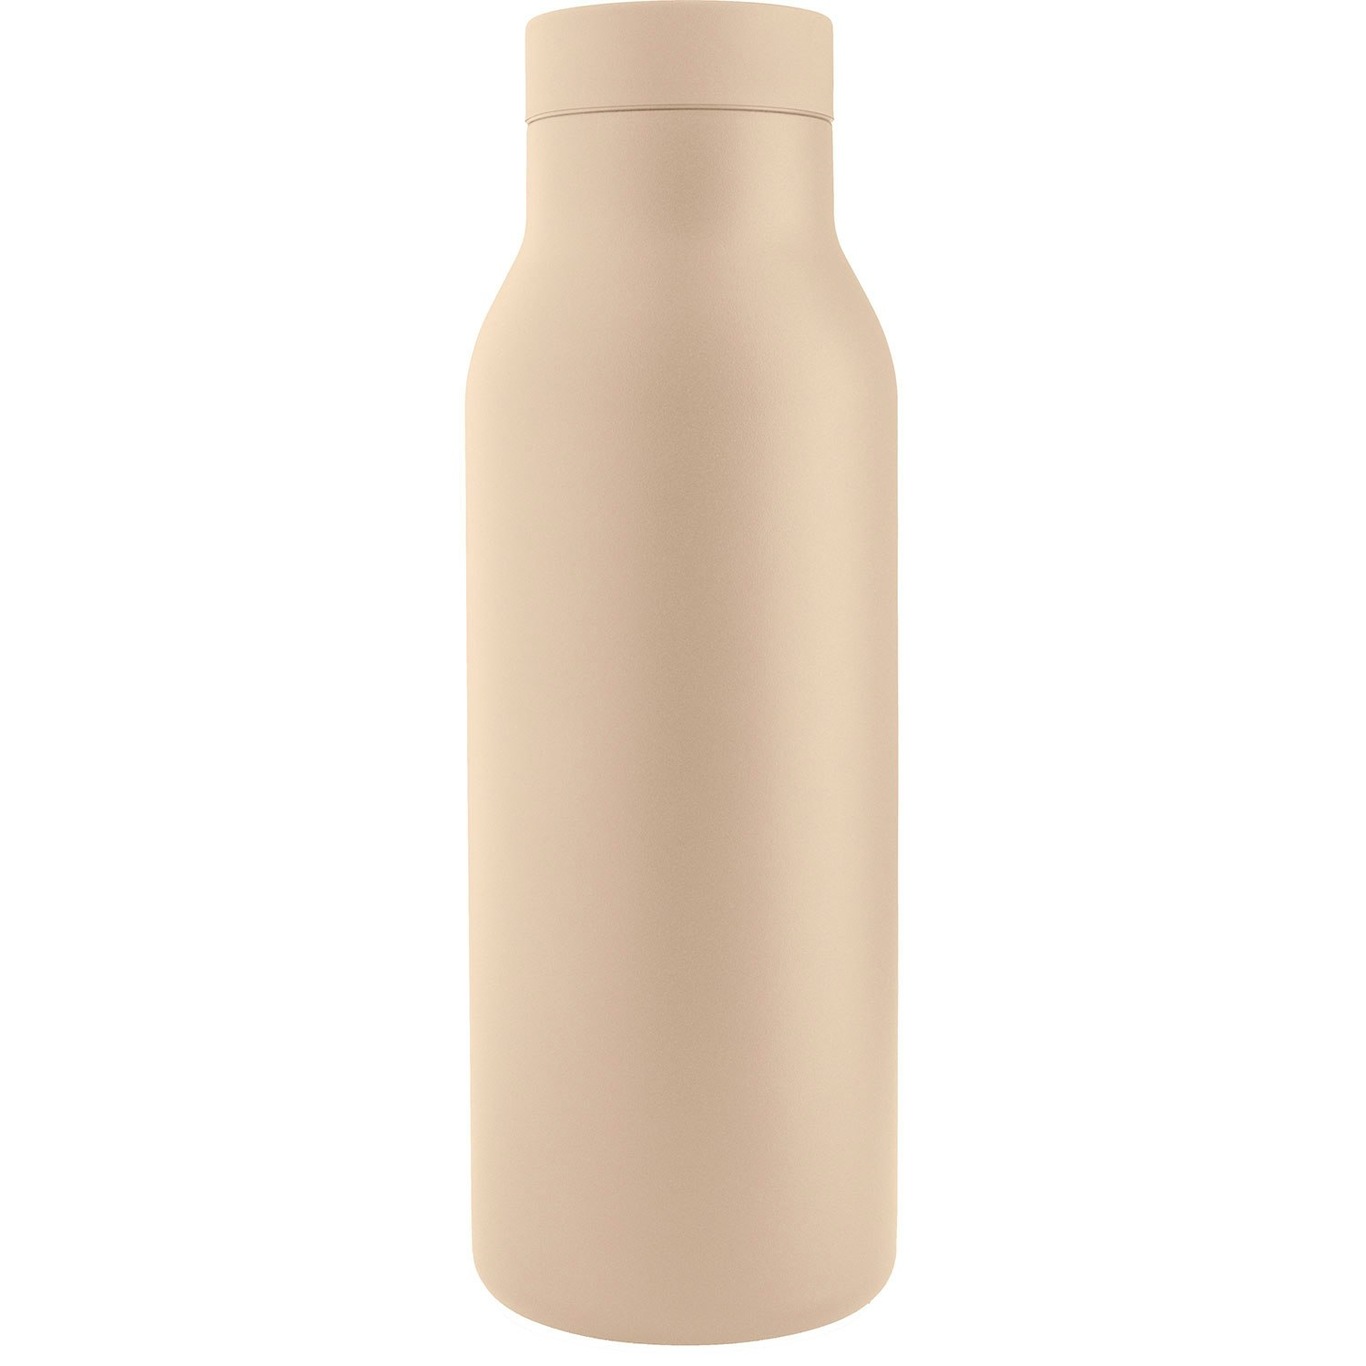 https://royaldesign.com/image/11/eva-solo-urban-thermos-bottle-05l-cgreen-7?w=800&quality=80